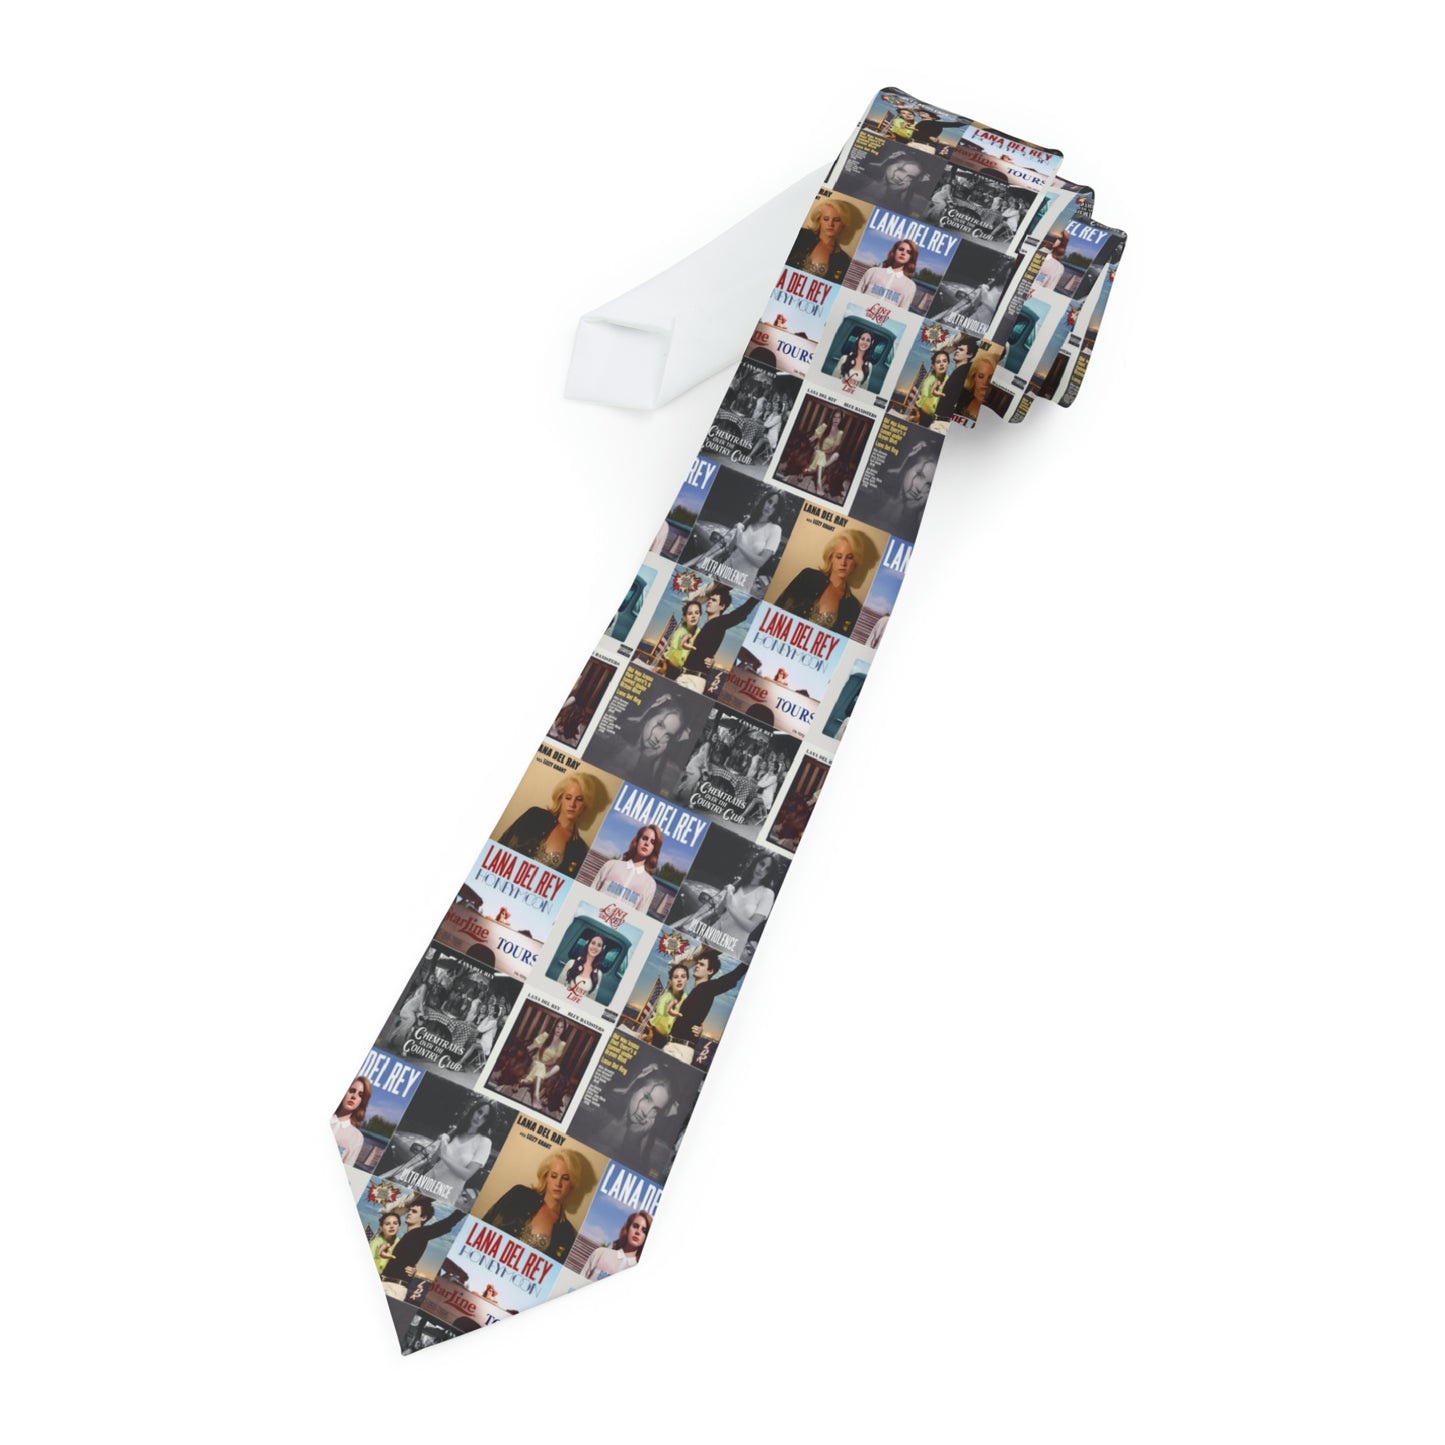 Lana Del Rey Album Cover Collage Neck Tie